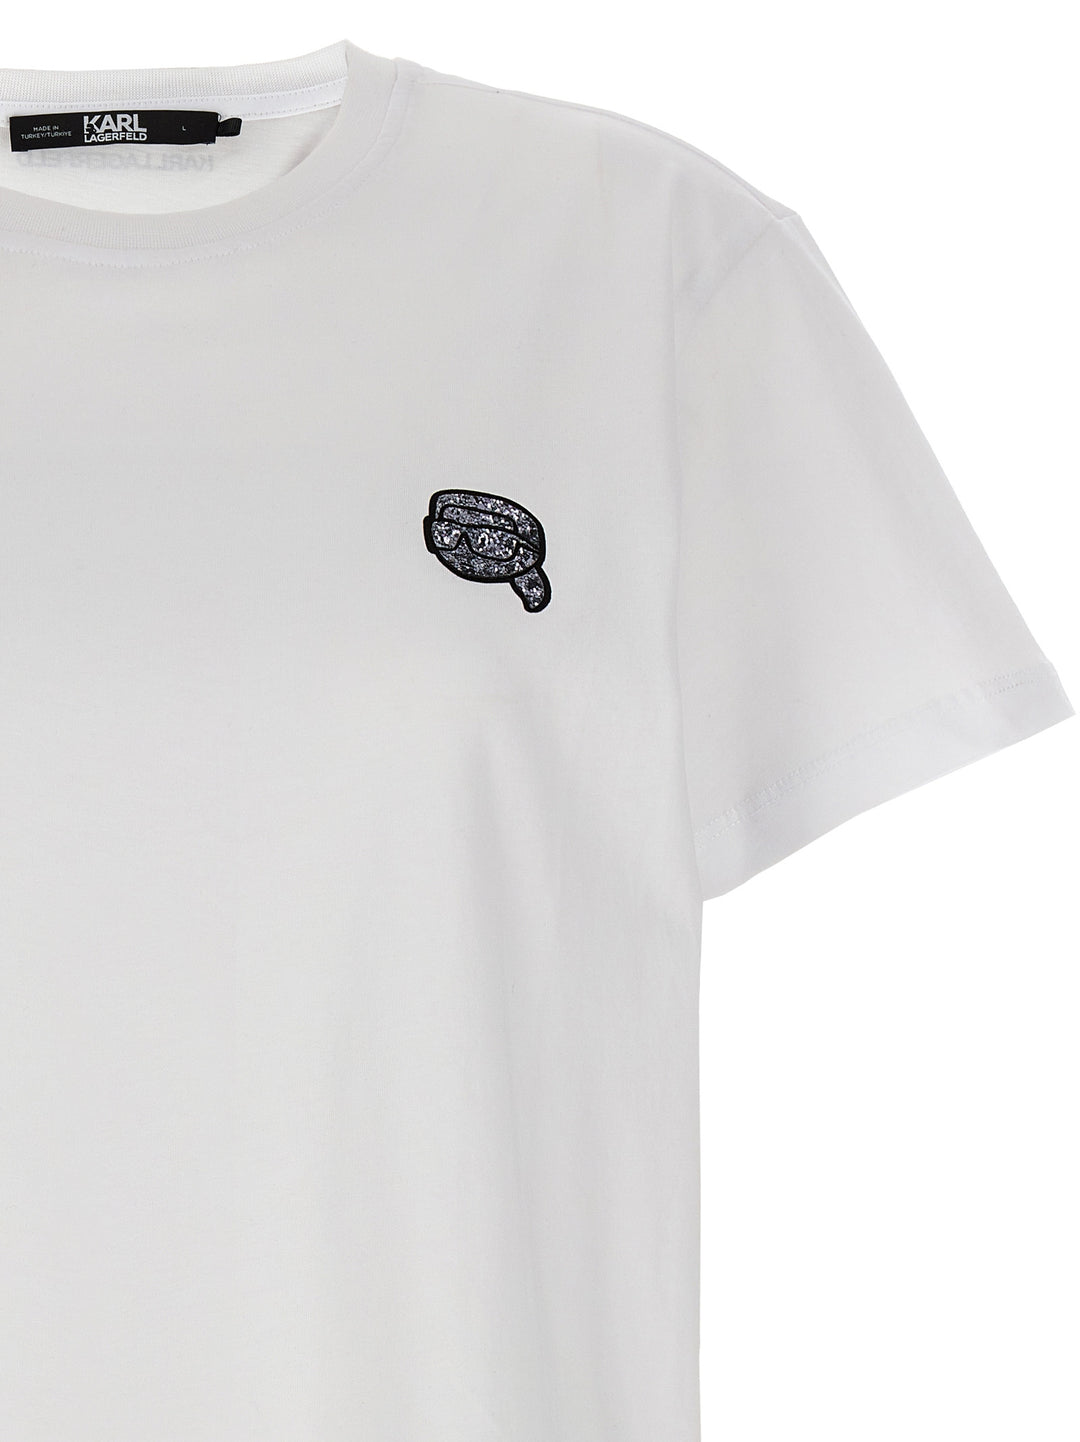 Ikonik 2,0 T Shirt Bianco